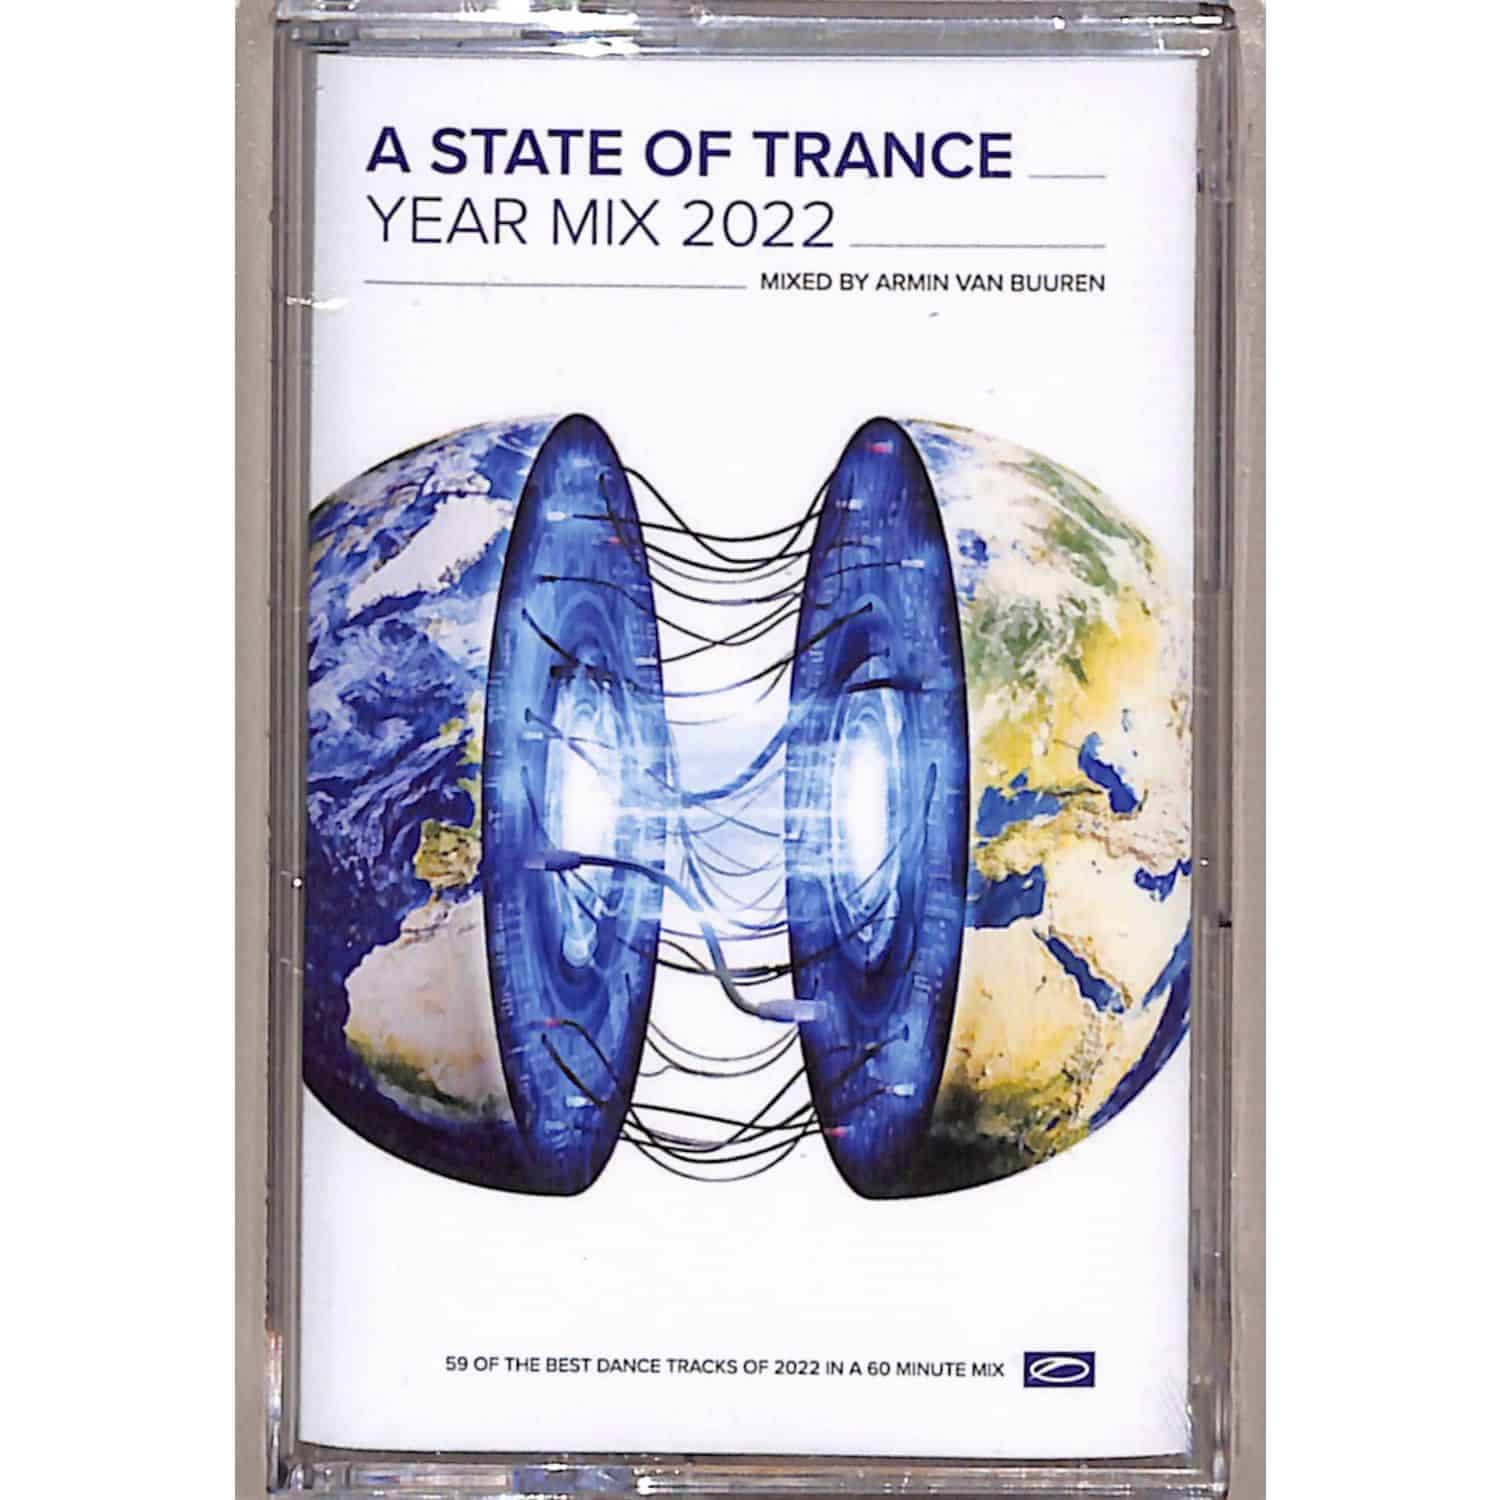 Armin van Buuren - A STATE OF TRANCE YEAR MIX 2022 